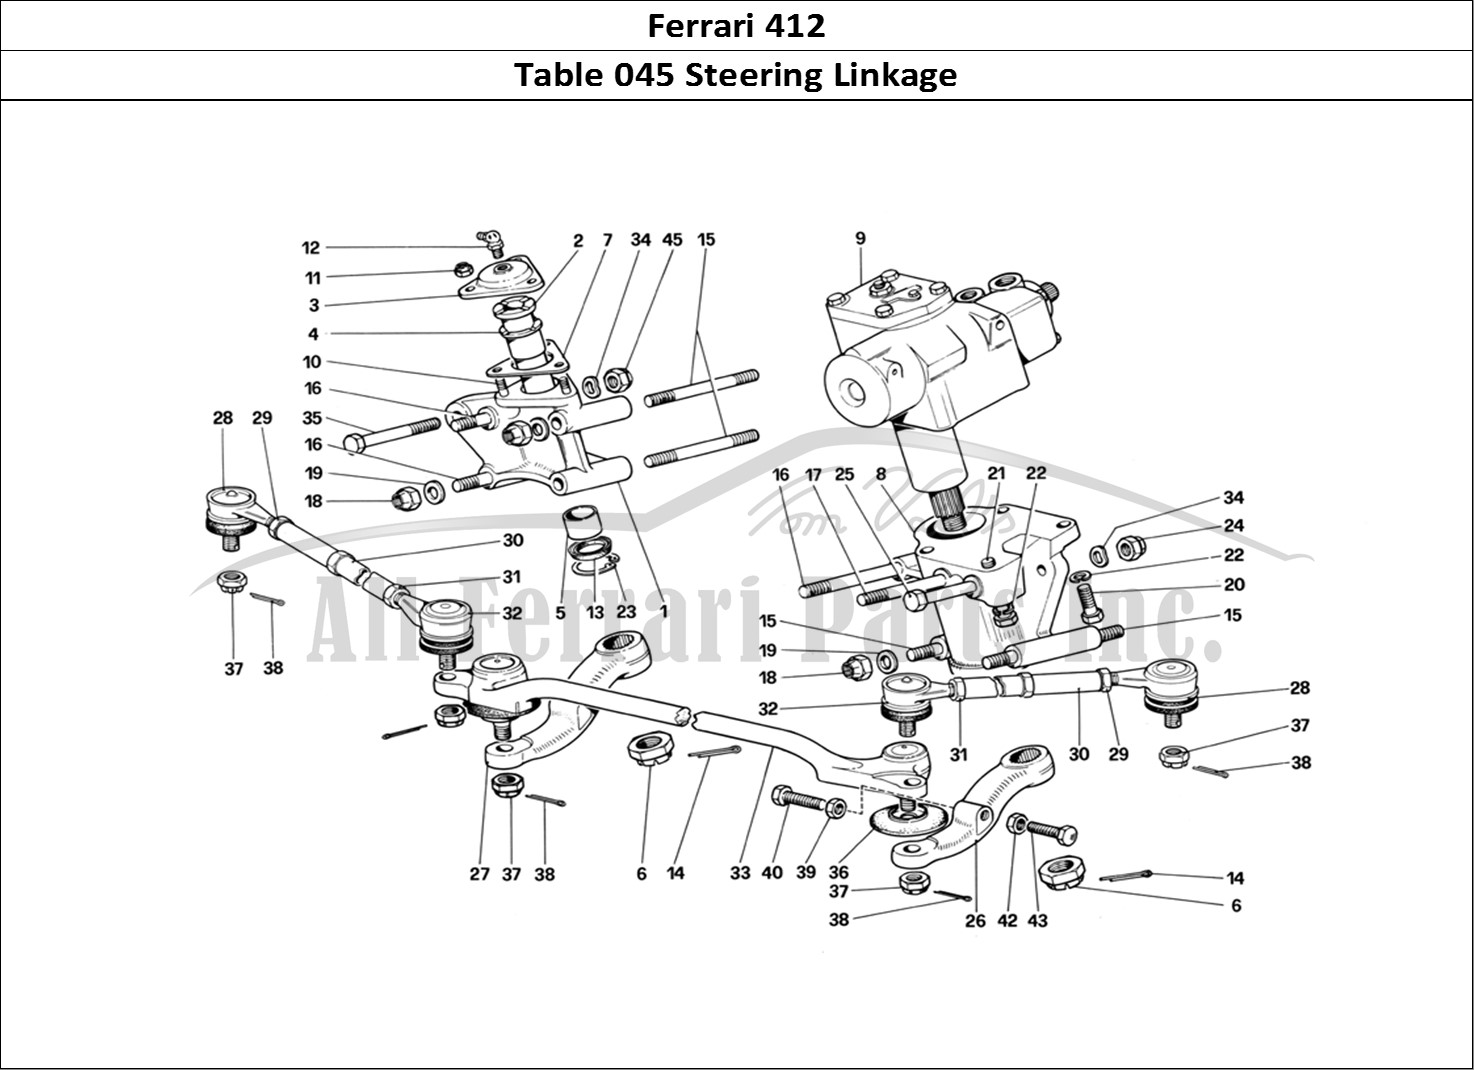 Ferrari Parts Ferrari 412 (Mechanical) Page 045 Steering Linkage